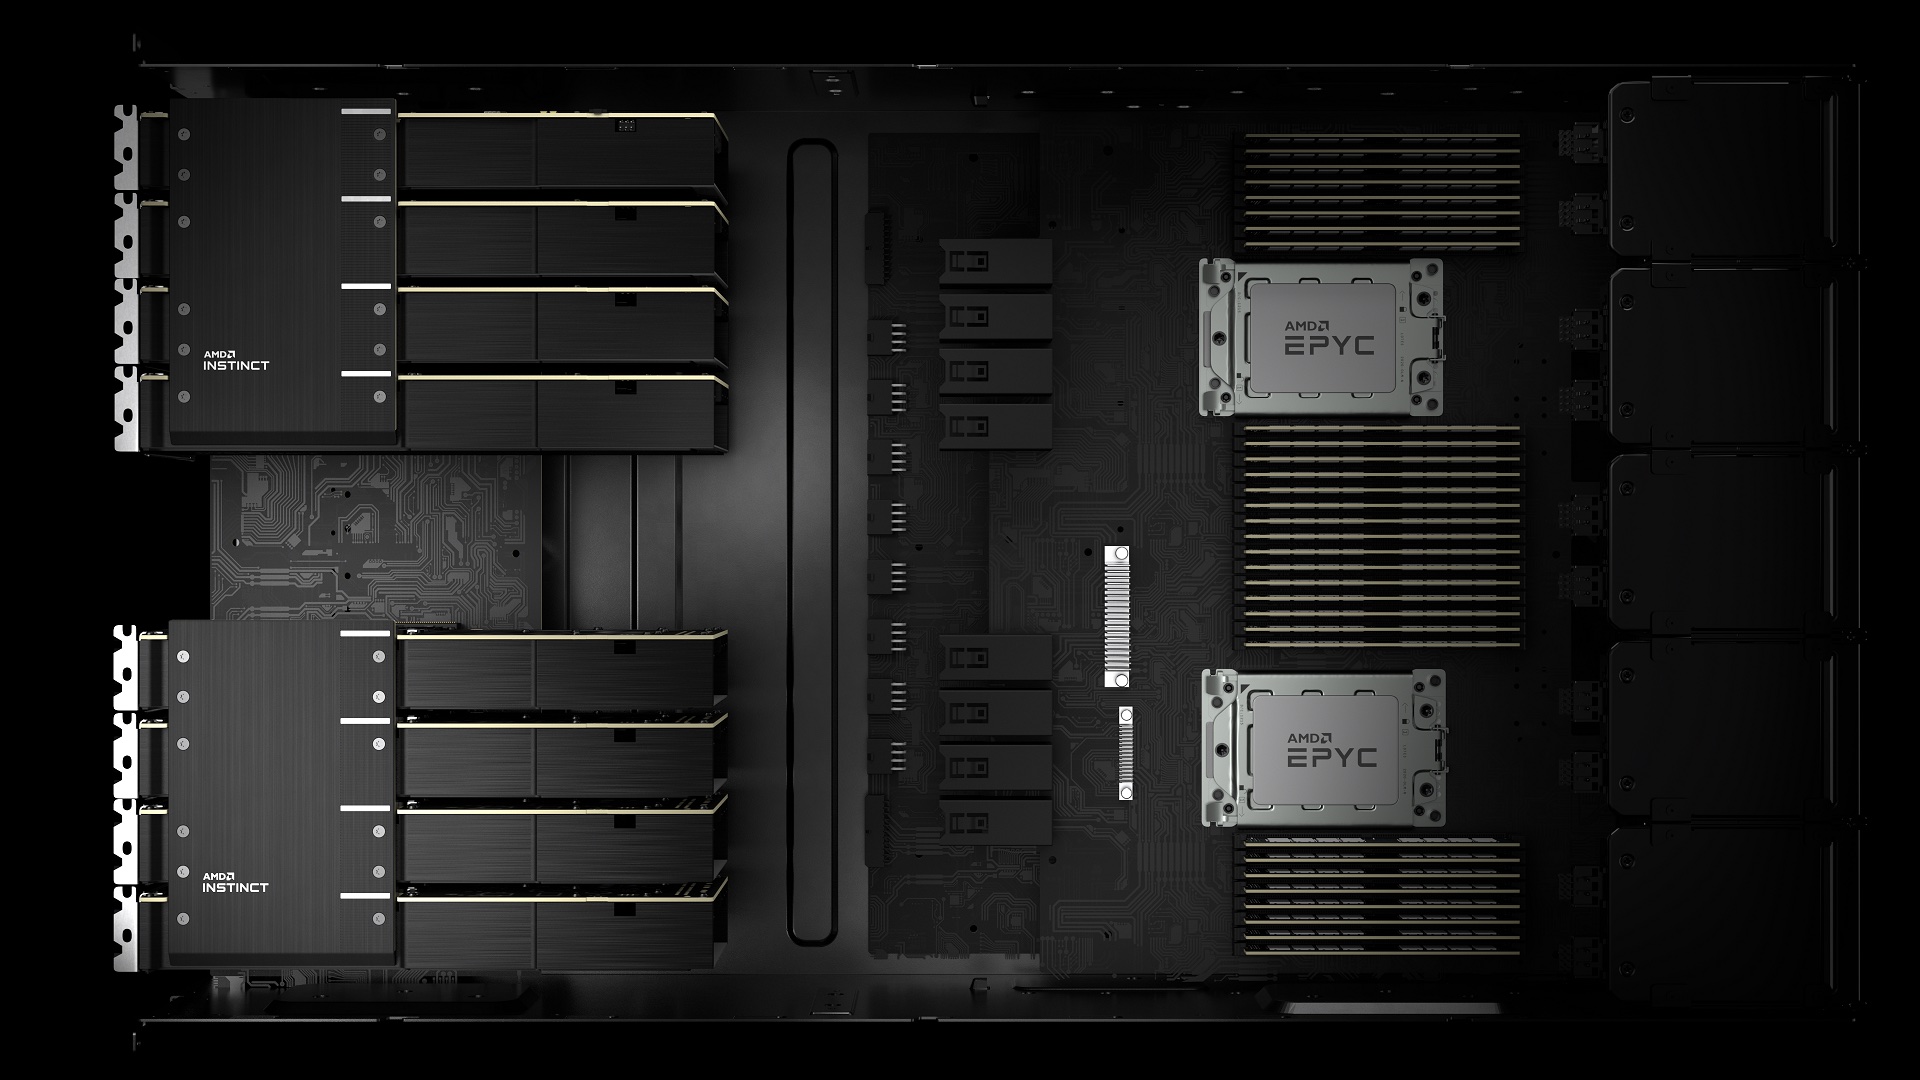 AMD እና HPE የ Adastra supercomputer ድጋፍን ይፋ አድርገዋል